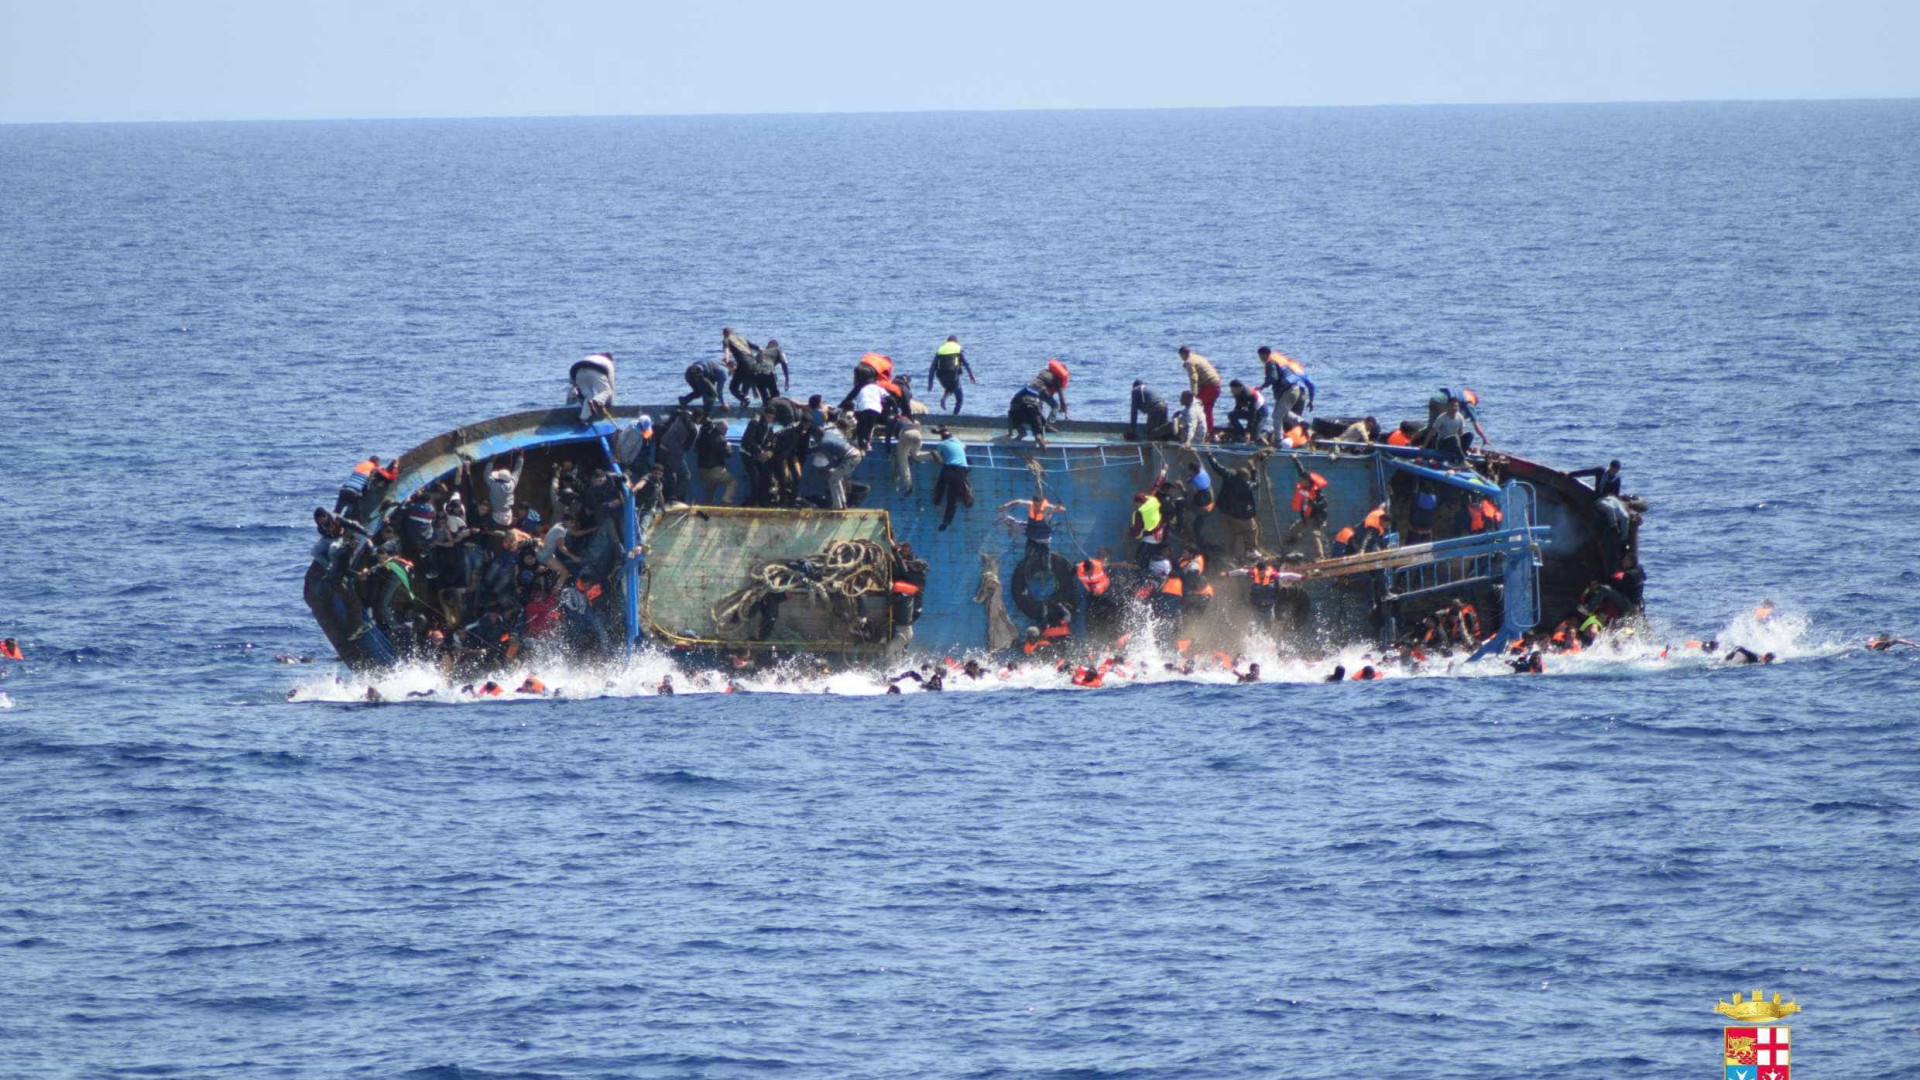 ONU: 700 migrantes morreram 
na semana passada no Mediterrâneo